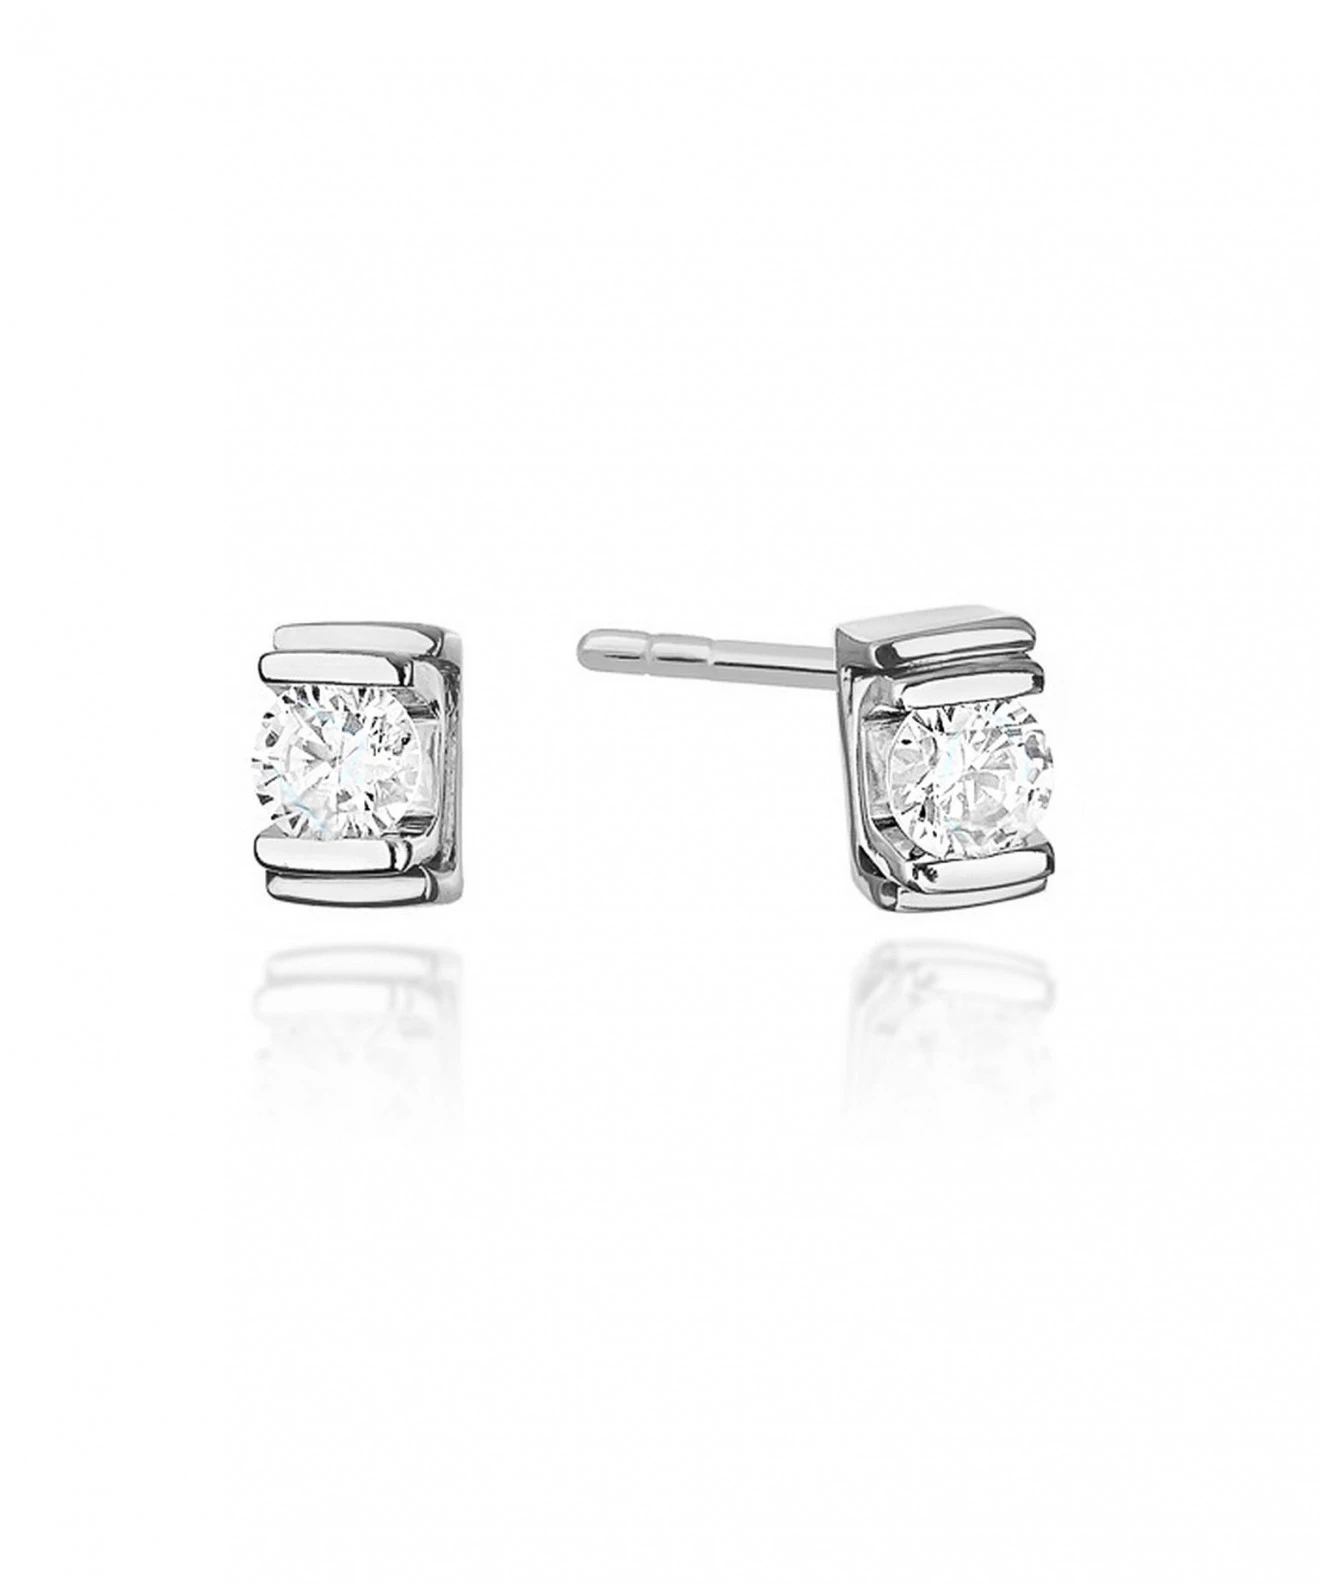 Bonore - White Gold 585 - Diamond 0,1 ct earrings 128792